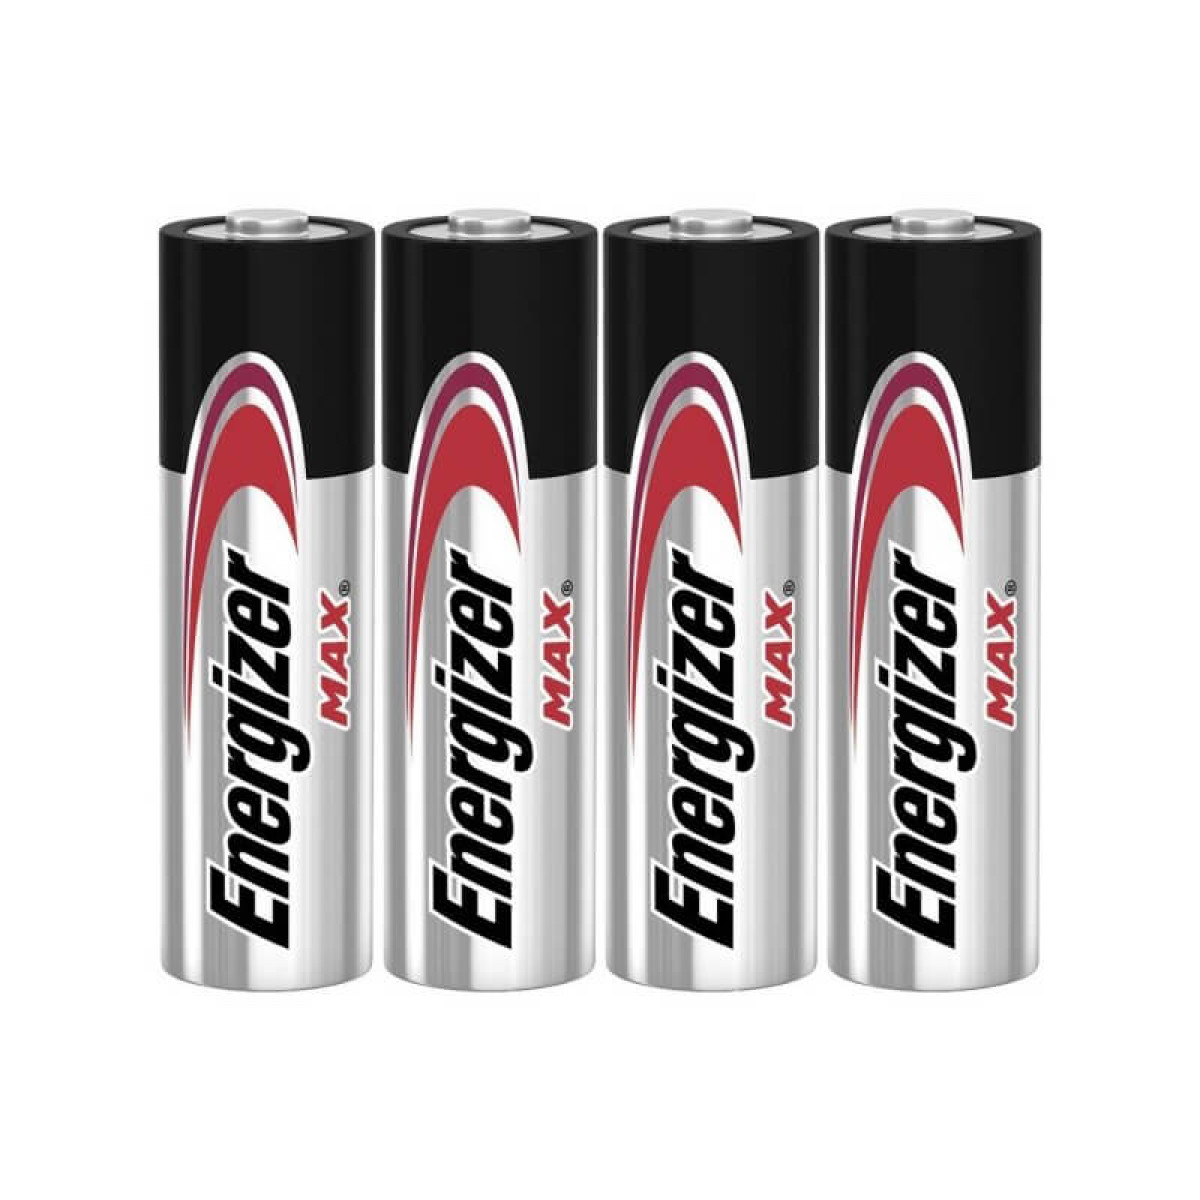 Batterie Batterie AA/LR6 Max ENERGIZER 4er-Pack Batterie Alkaline